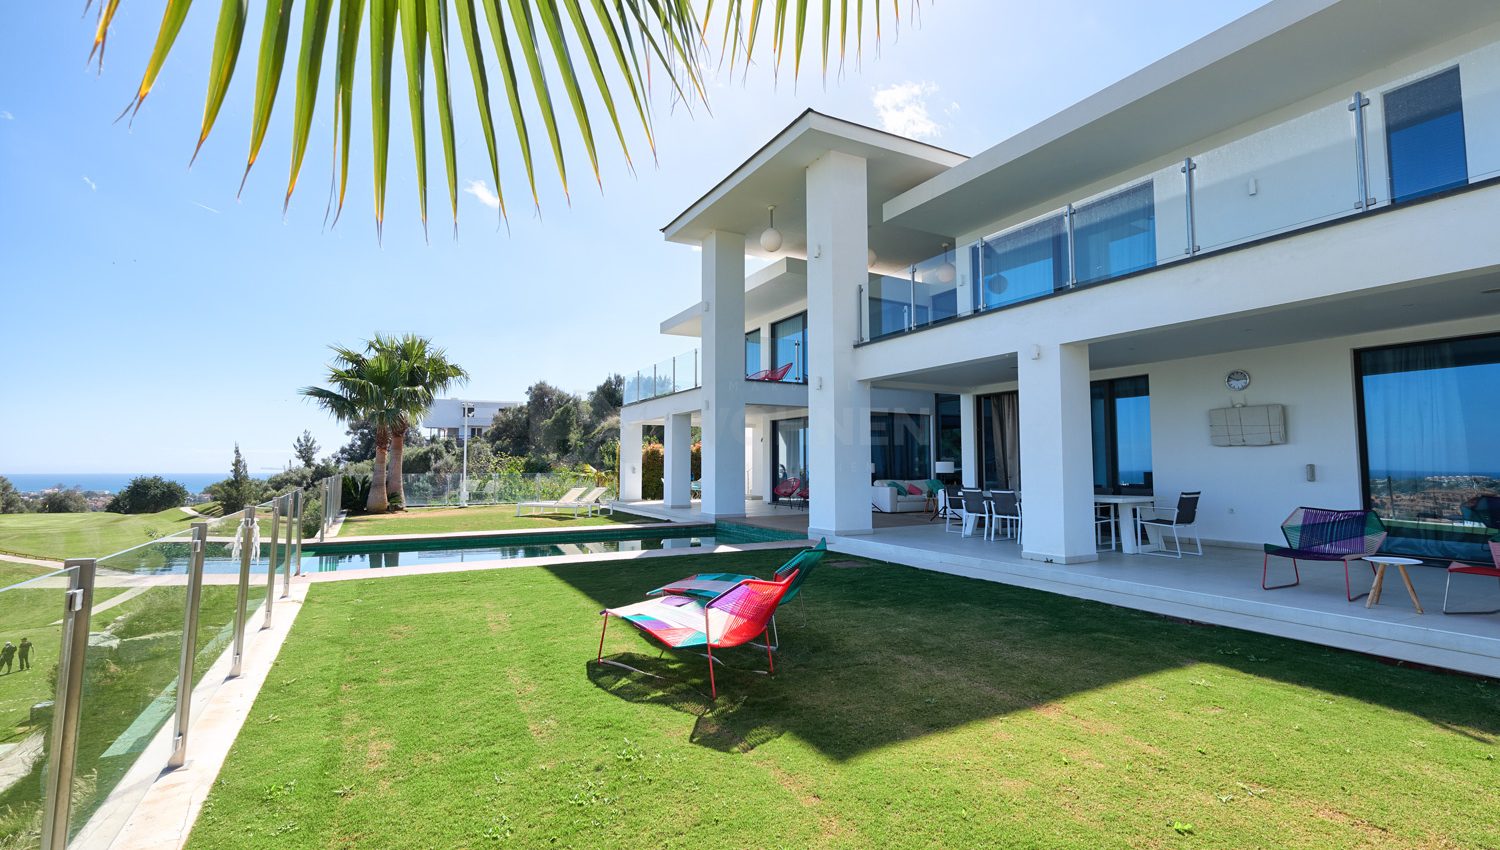 Villa moderna contemporánea con espectaculares vistas al mar